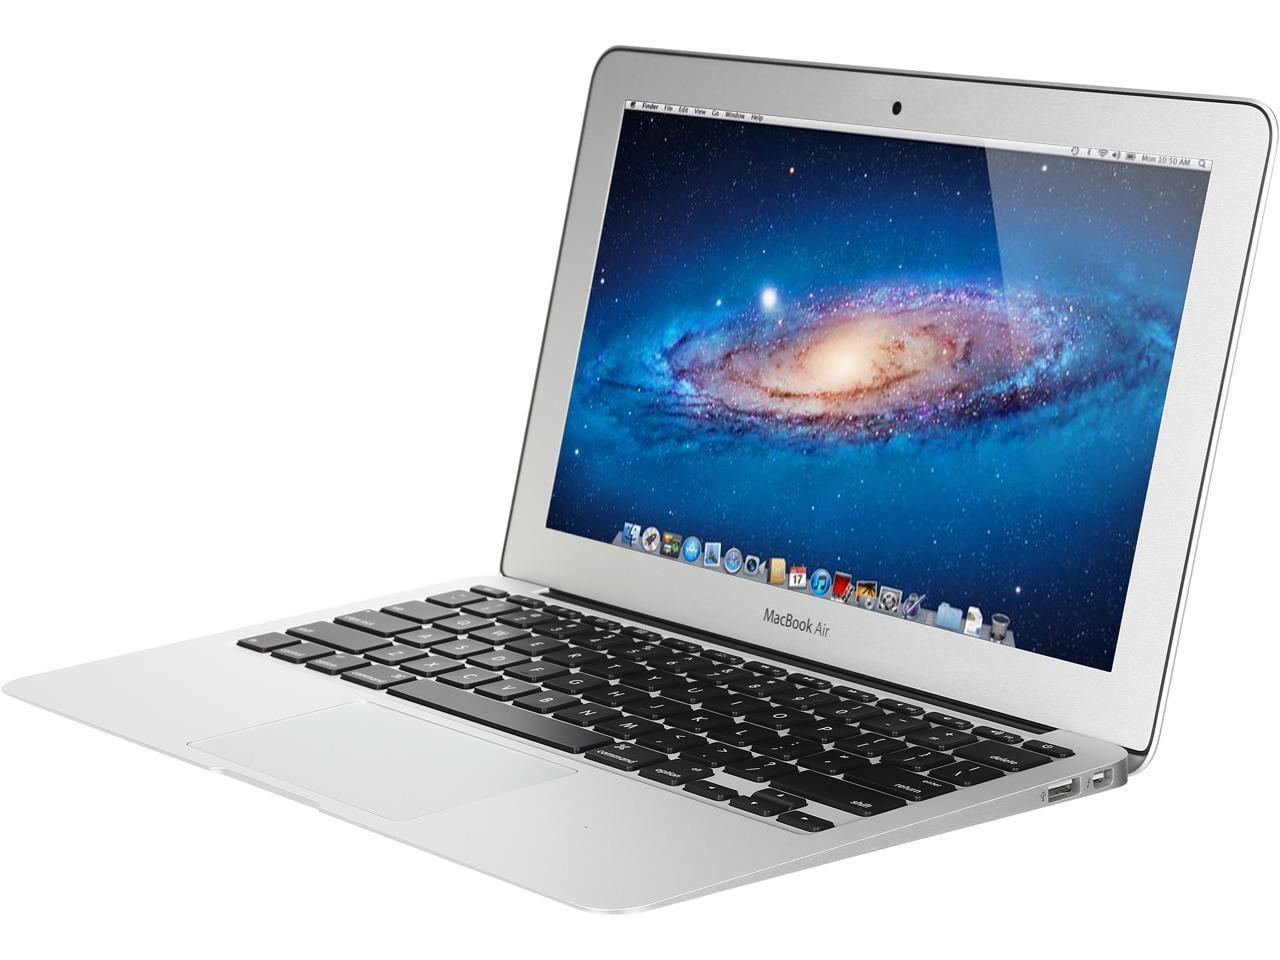 Apple MacBook Air Core i5 1.7GHz 4GB RAM 64GB SSD 11 - MD223LL/A